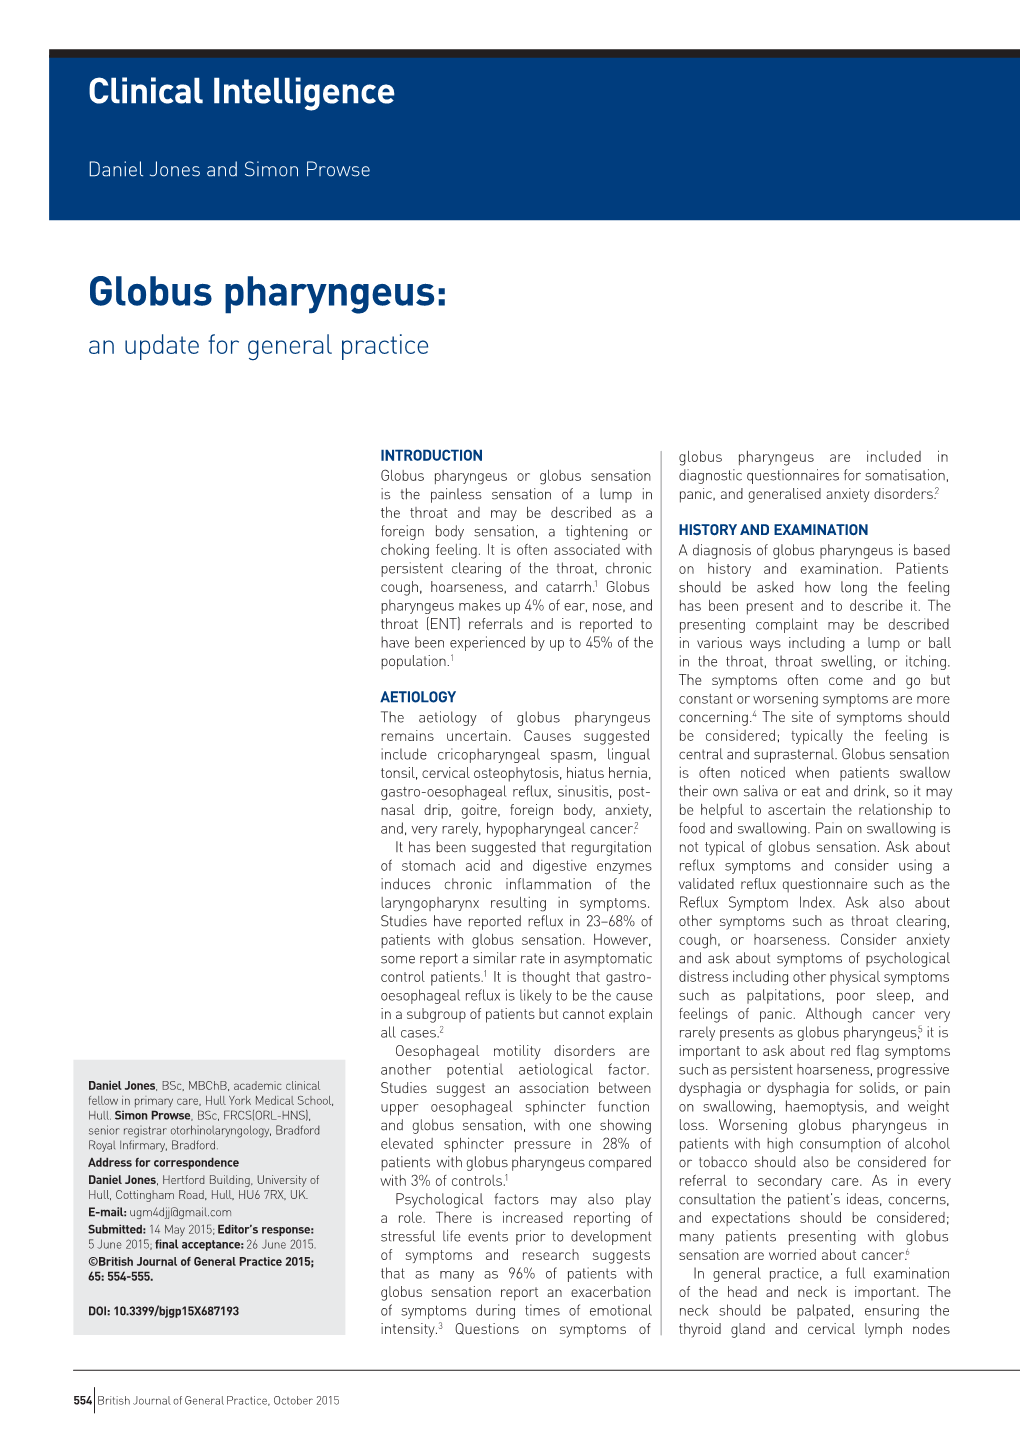 Globus Pharyngeus: an Update for General Practice